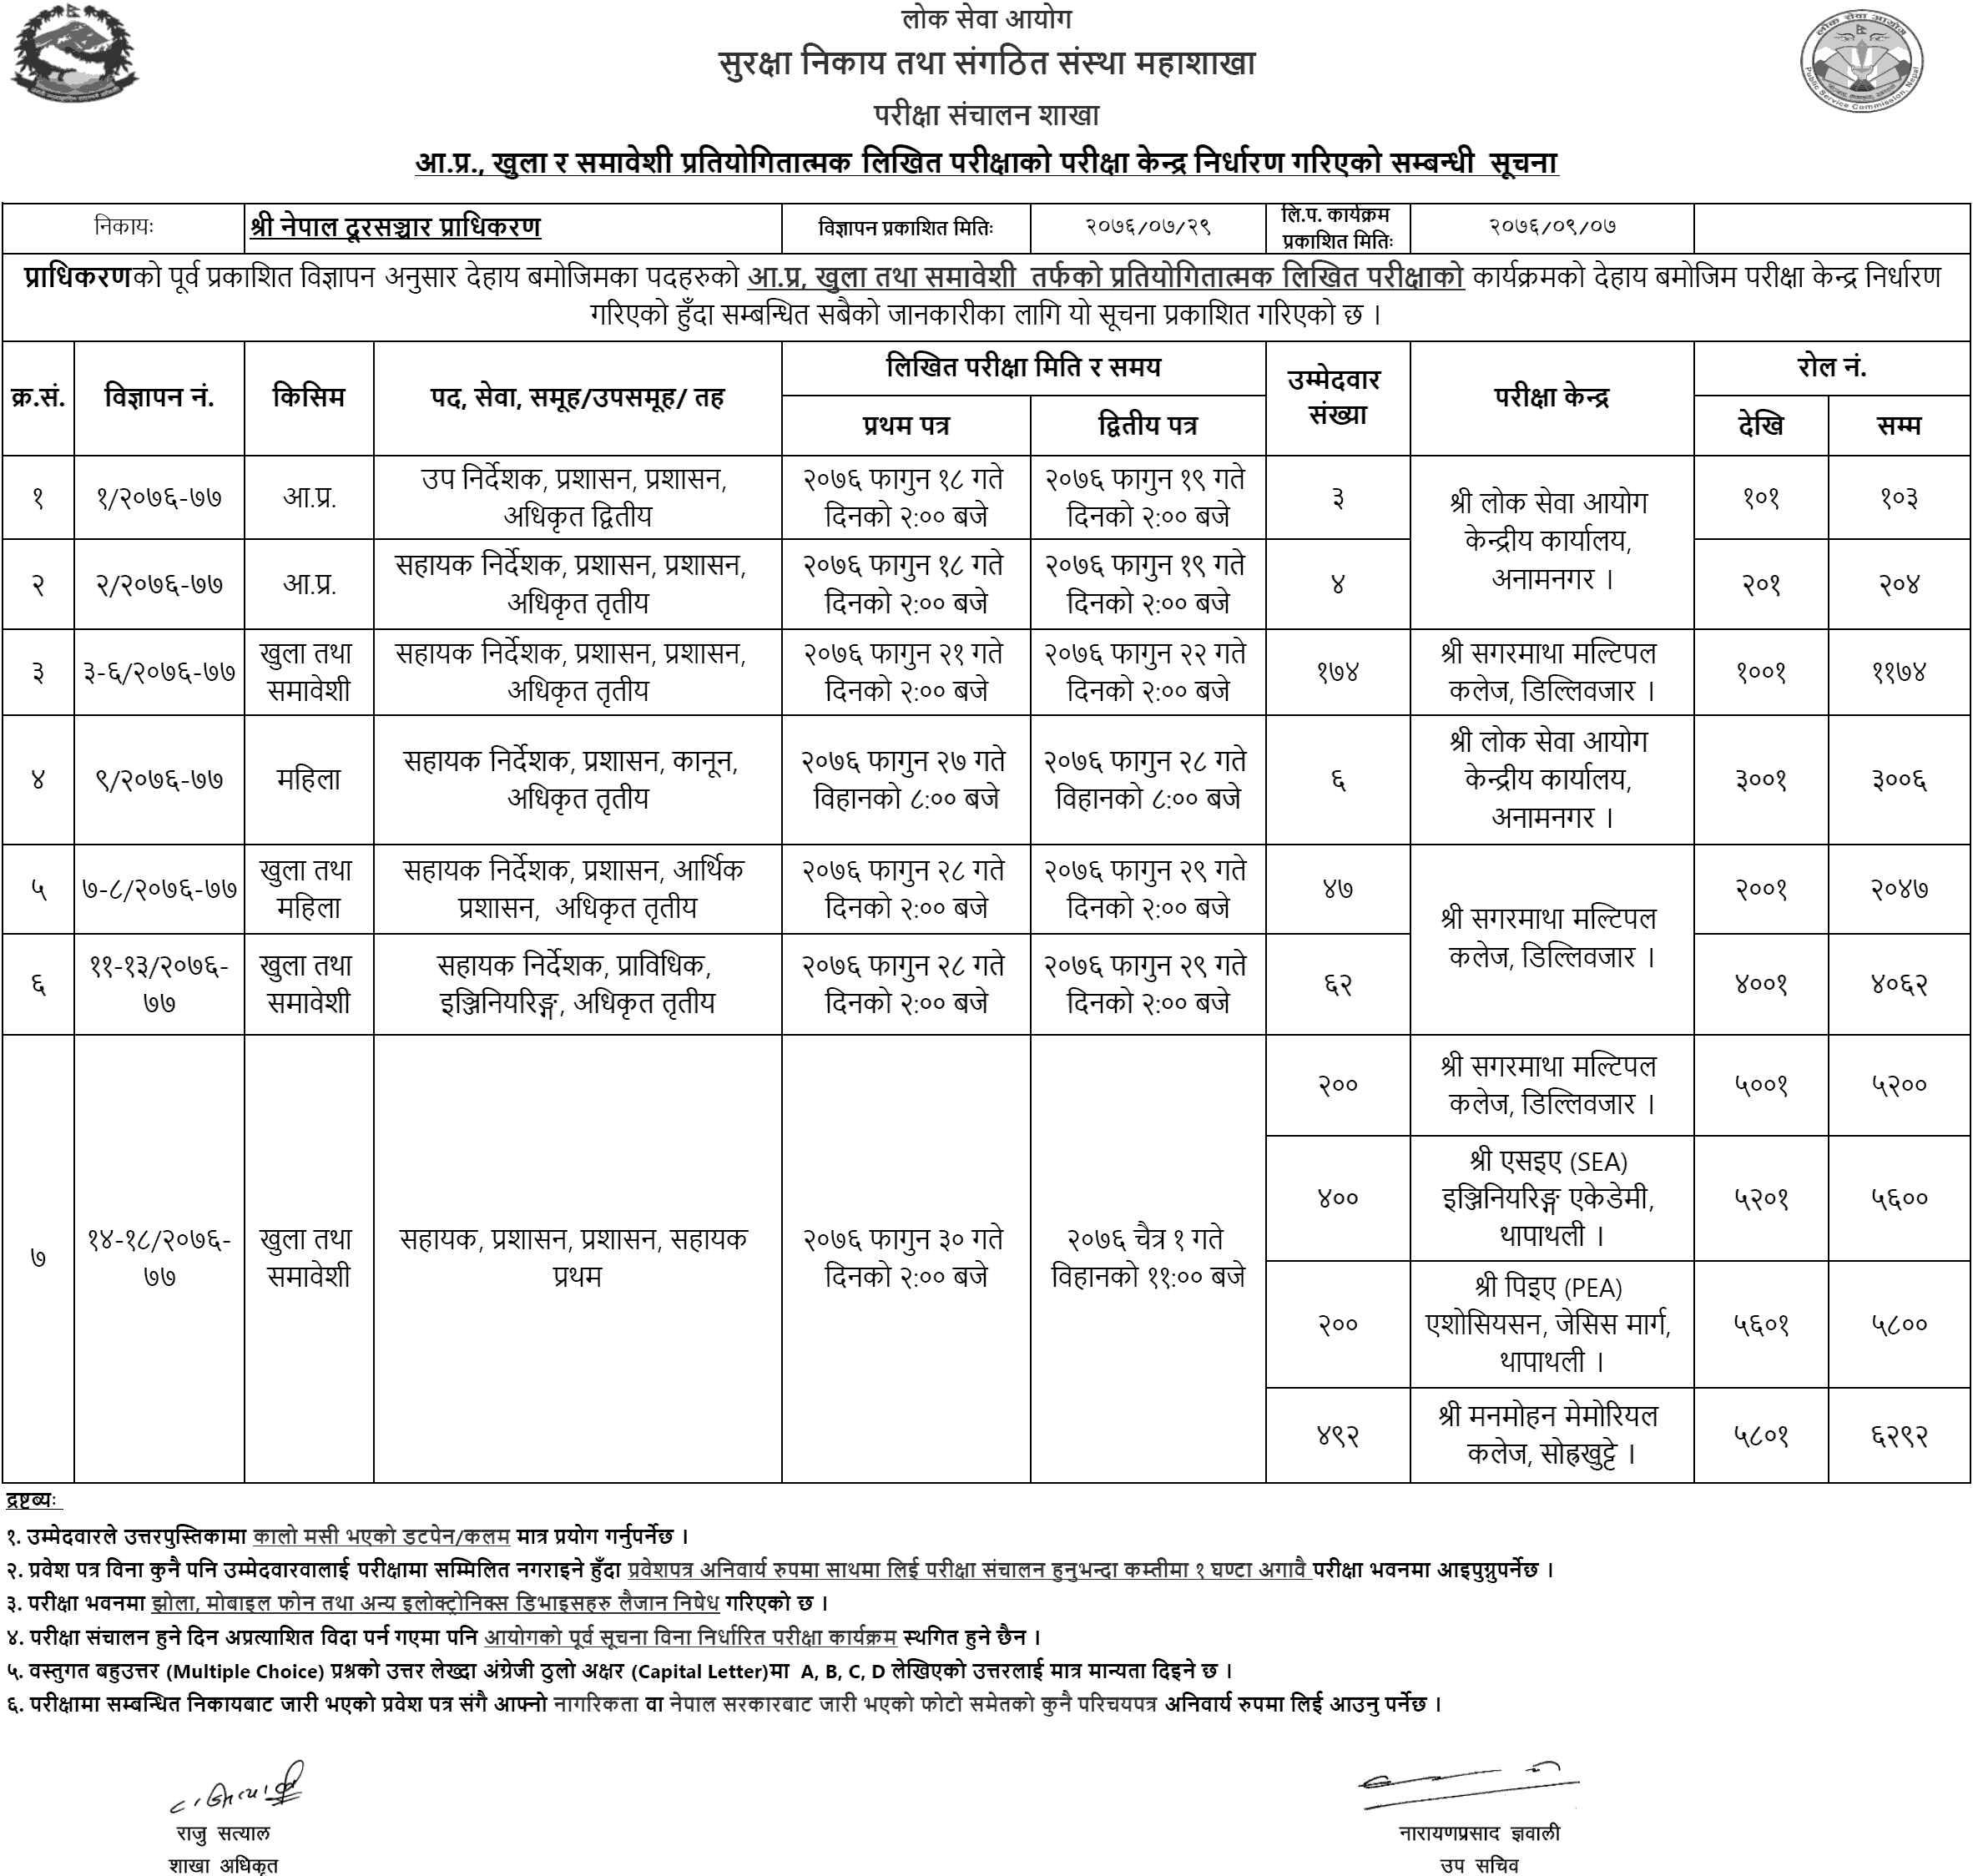 Nepal Telecommunication Authority Written Exam Exam Center for Various Positions